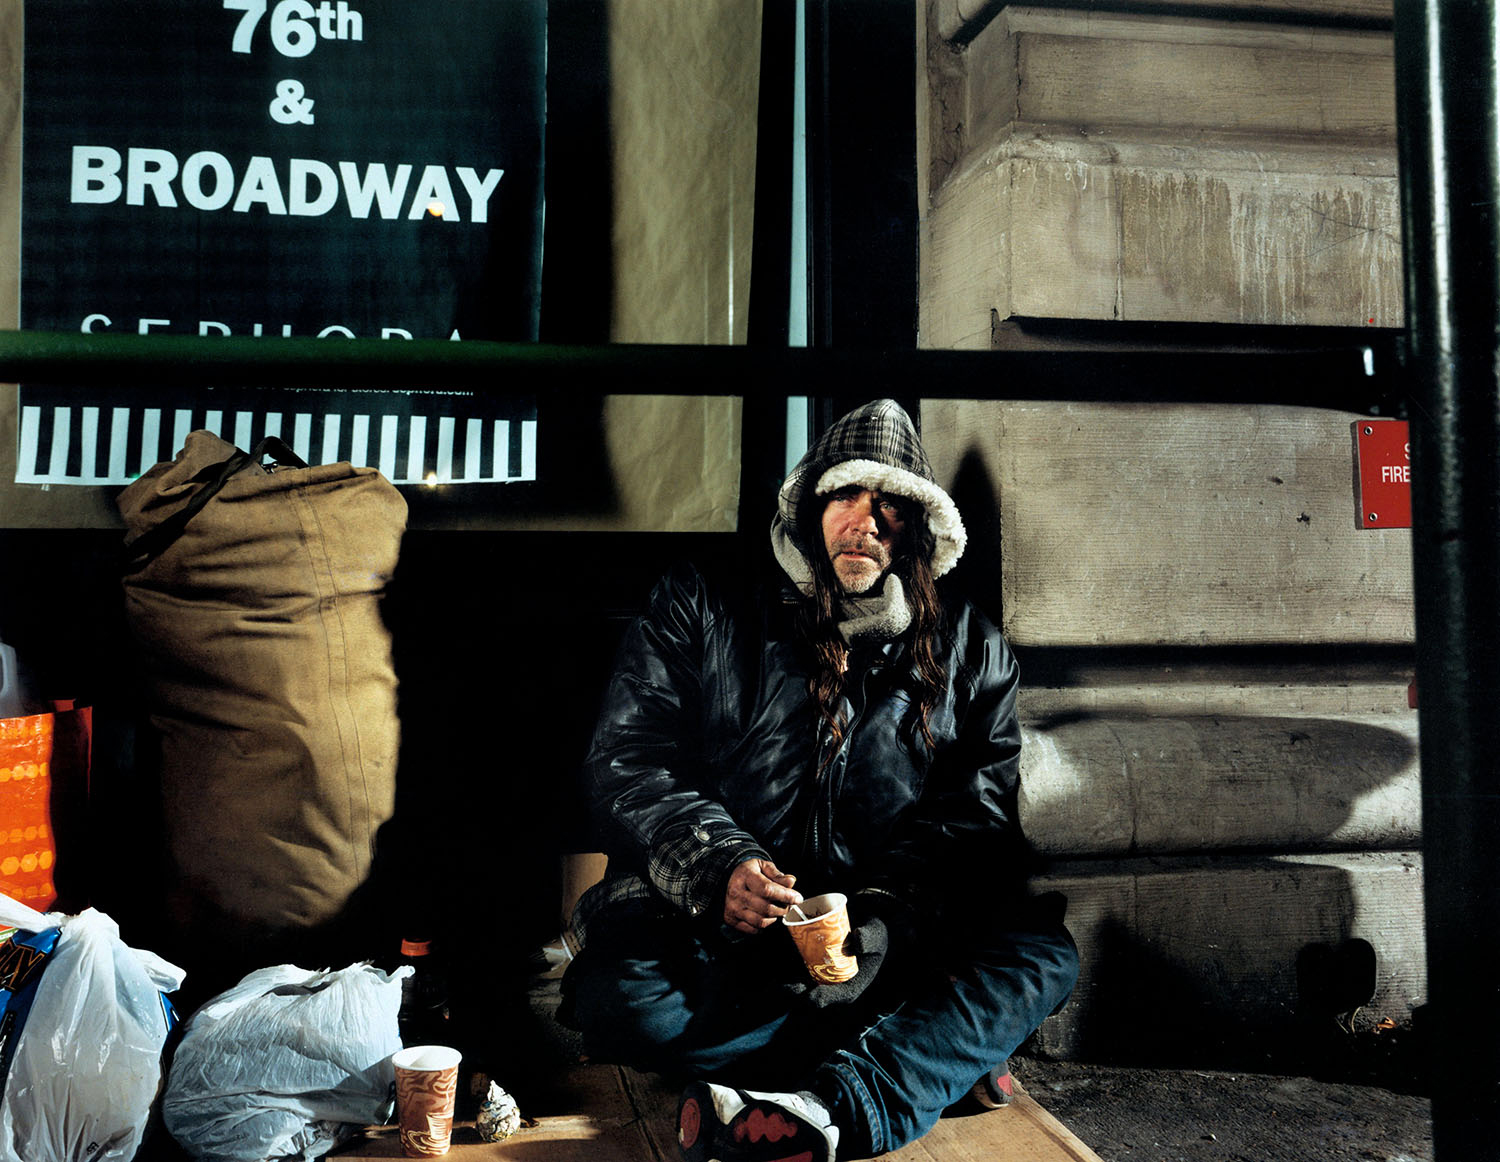   Connie - homeless man - New York City  